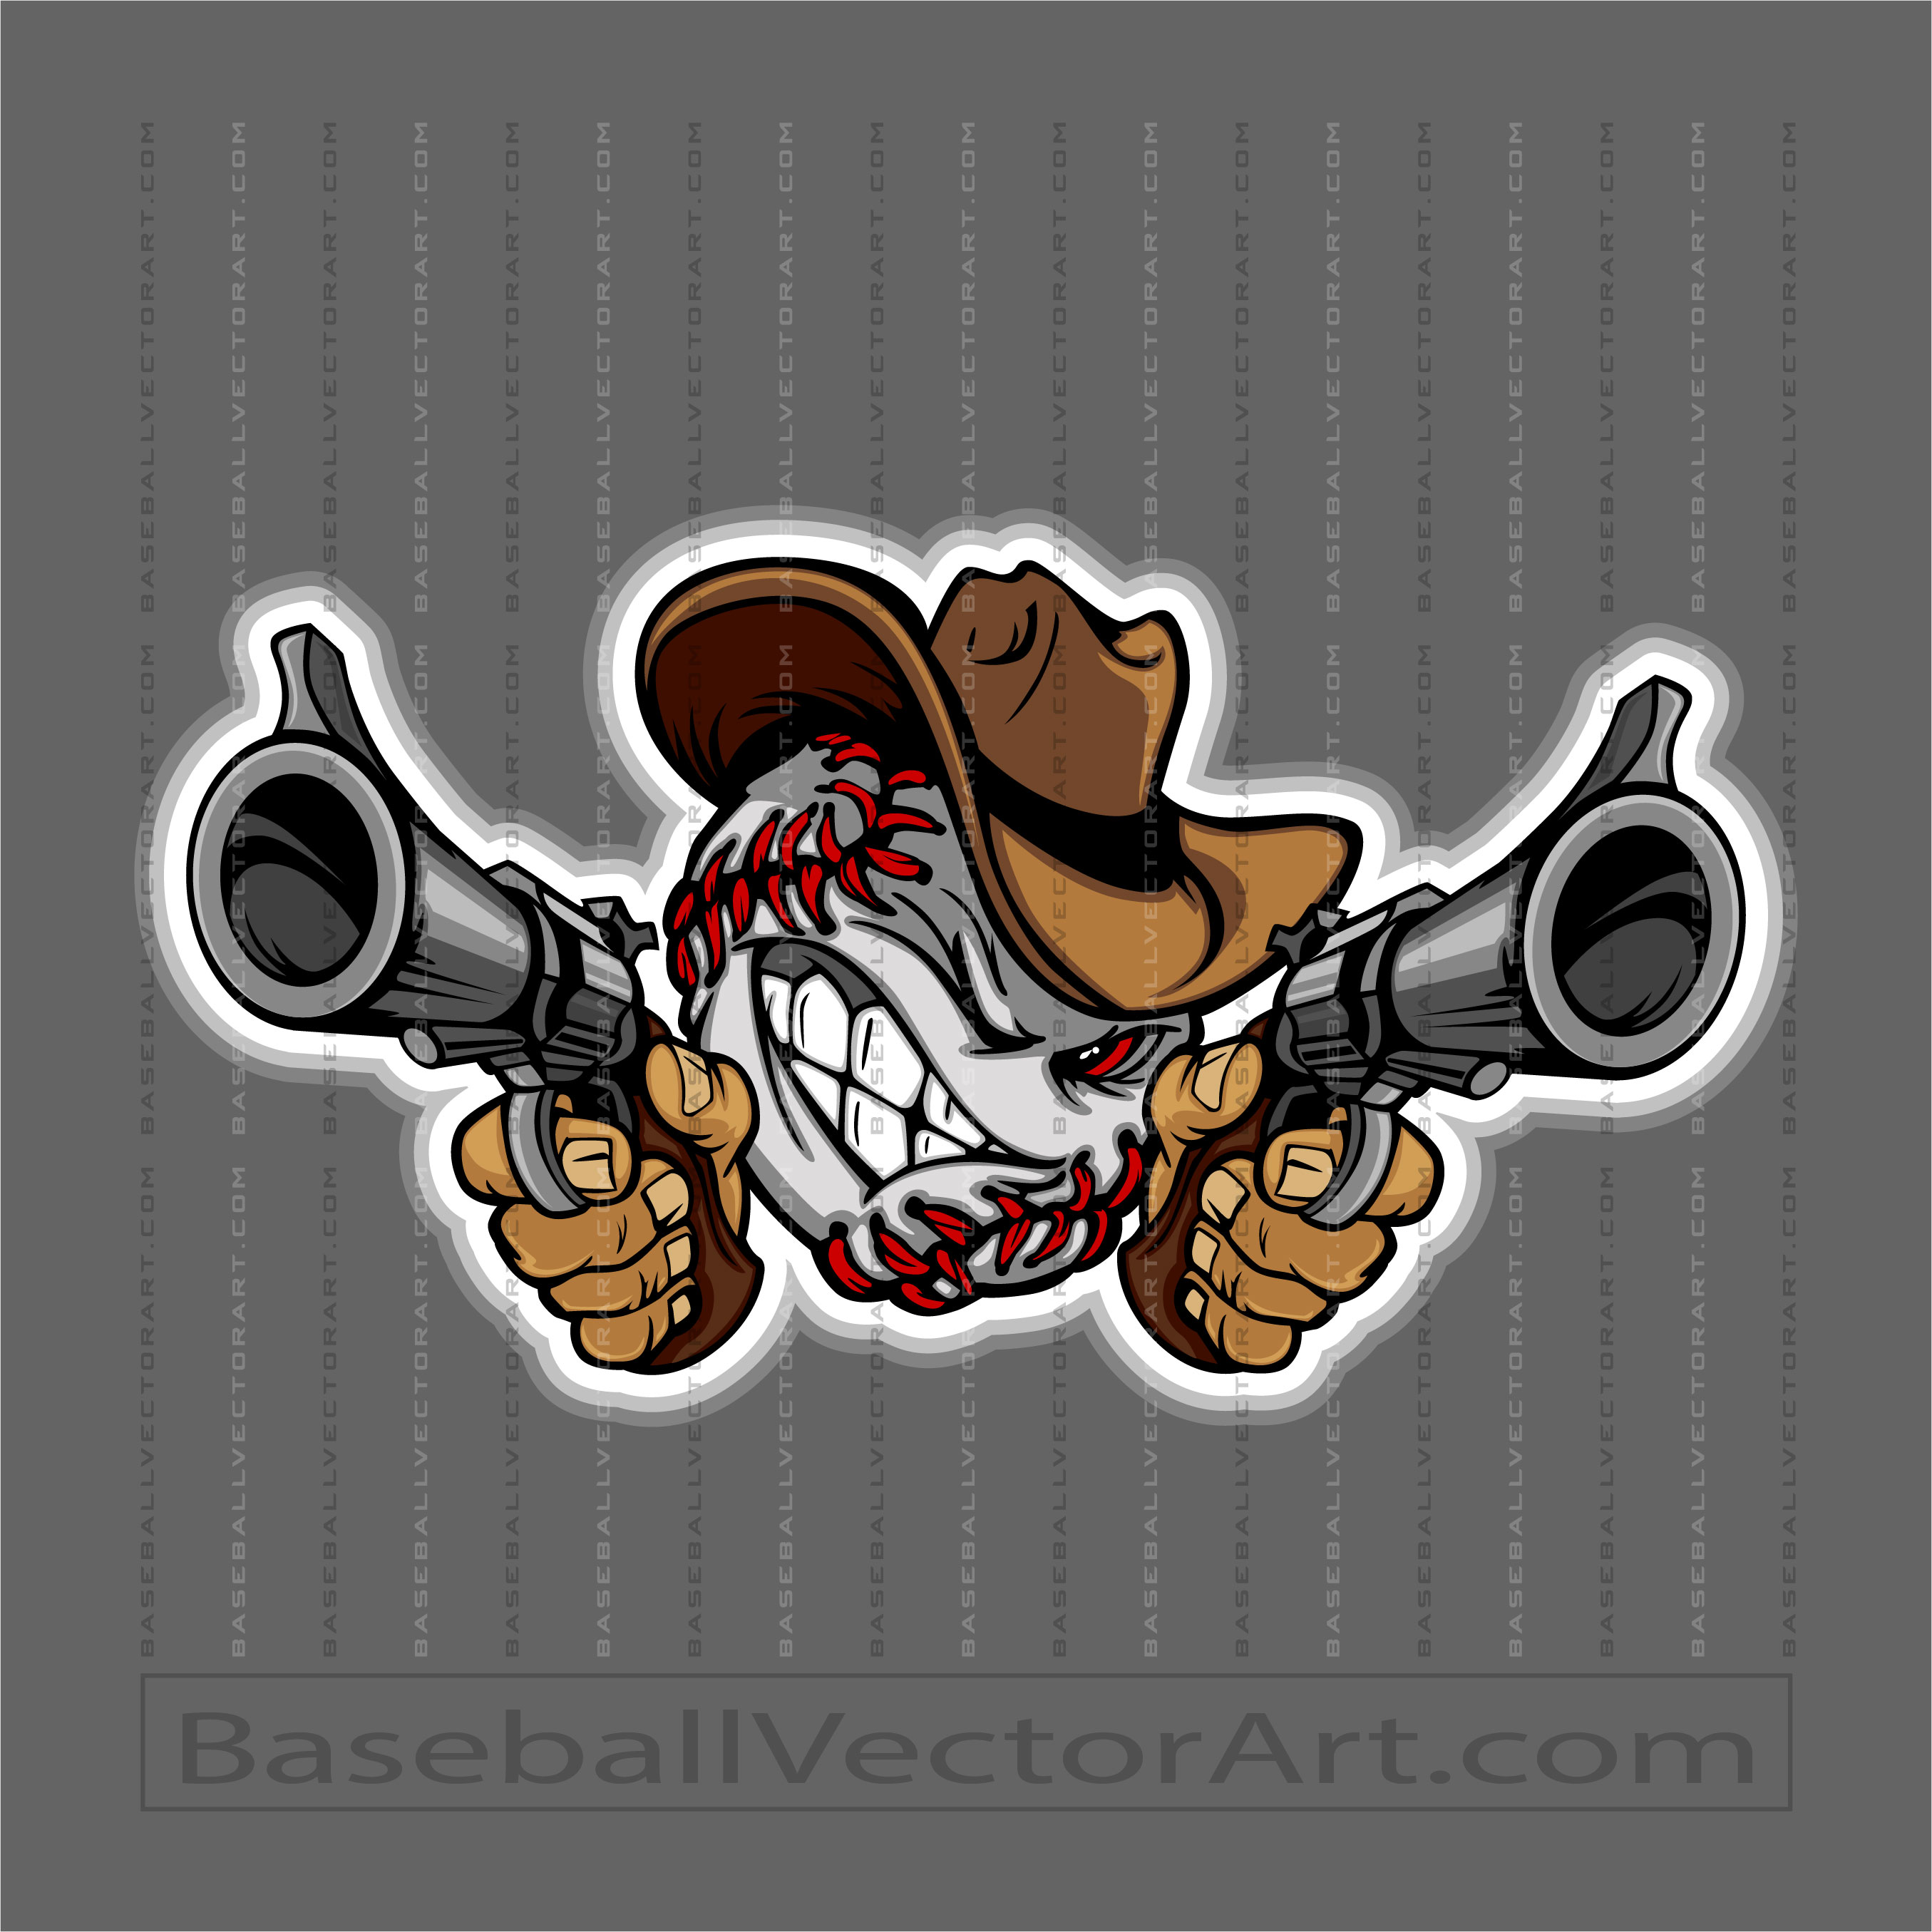 Roughnecks Baseball Pin Art